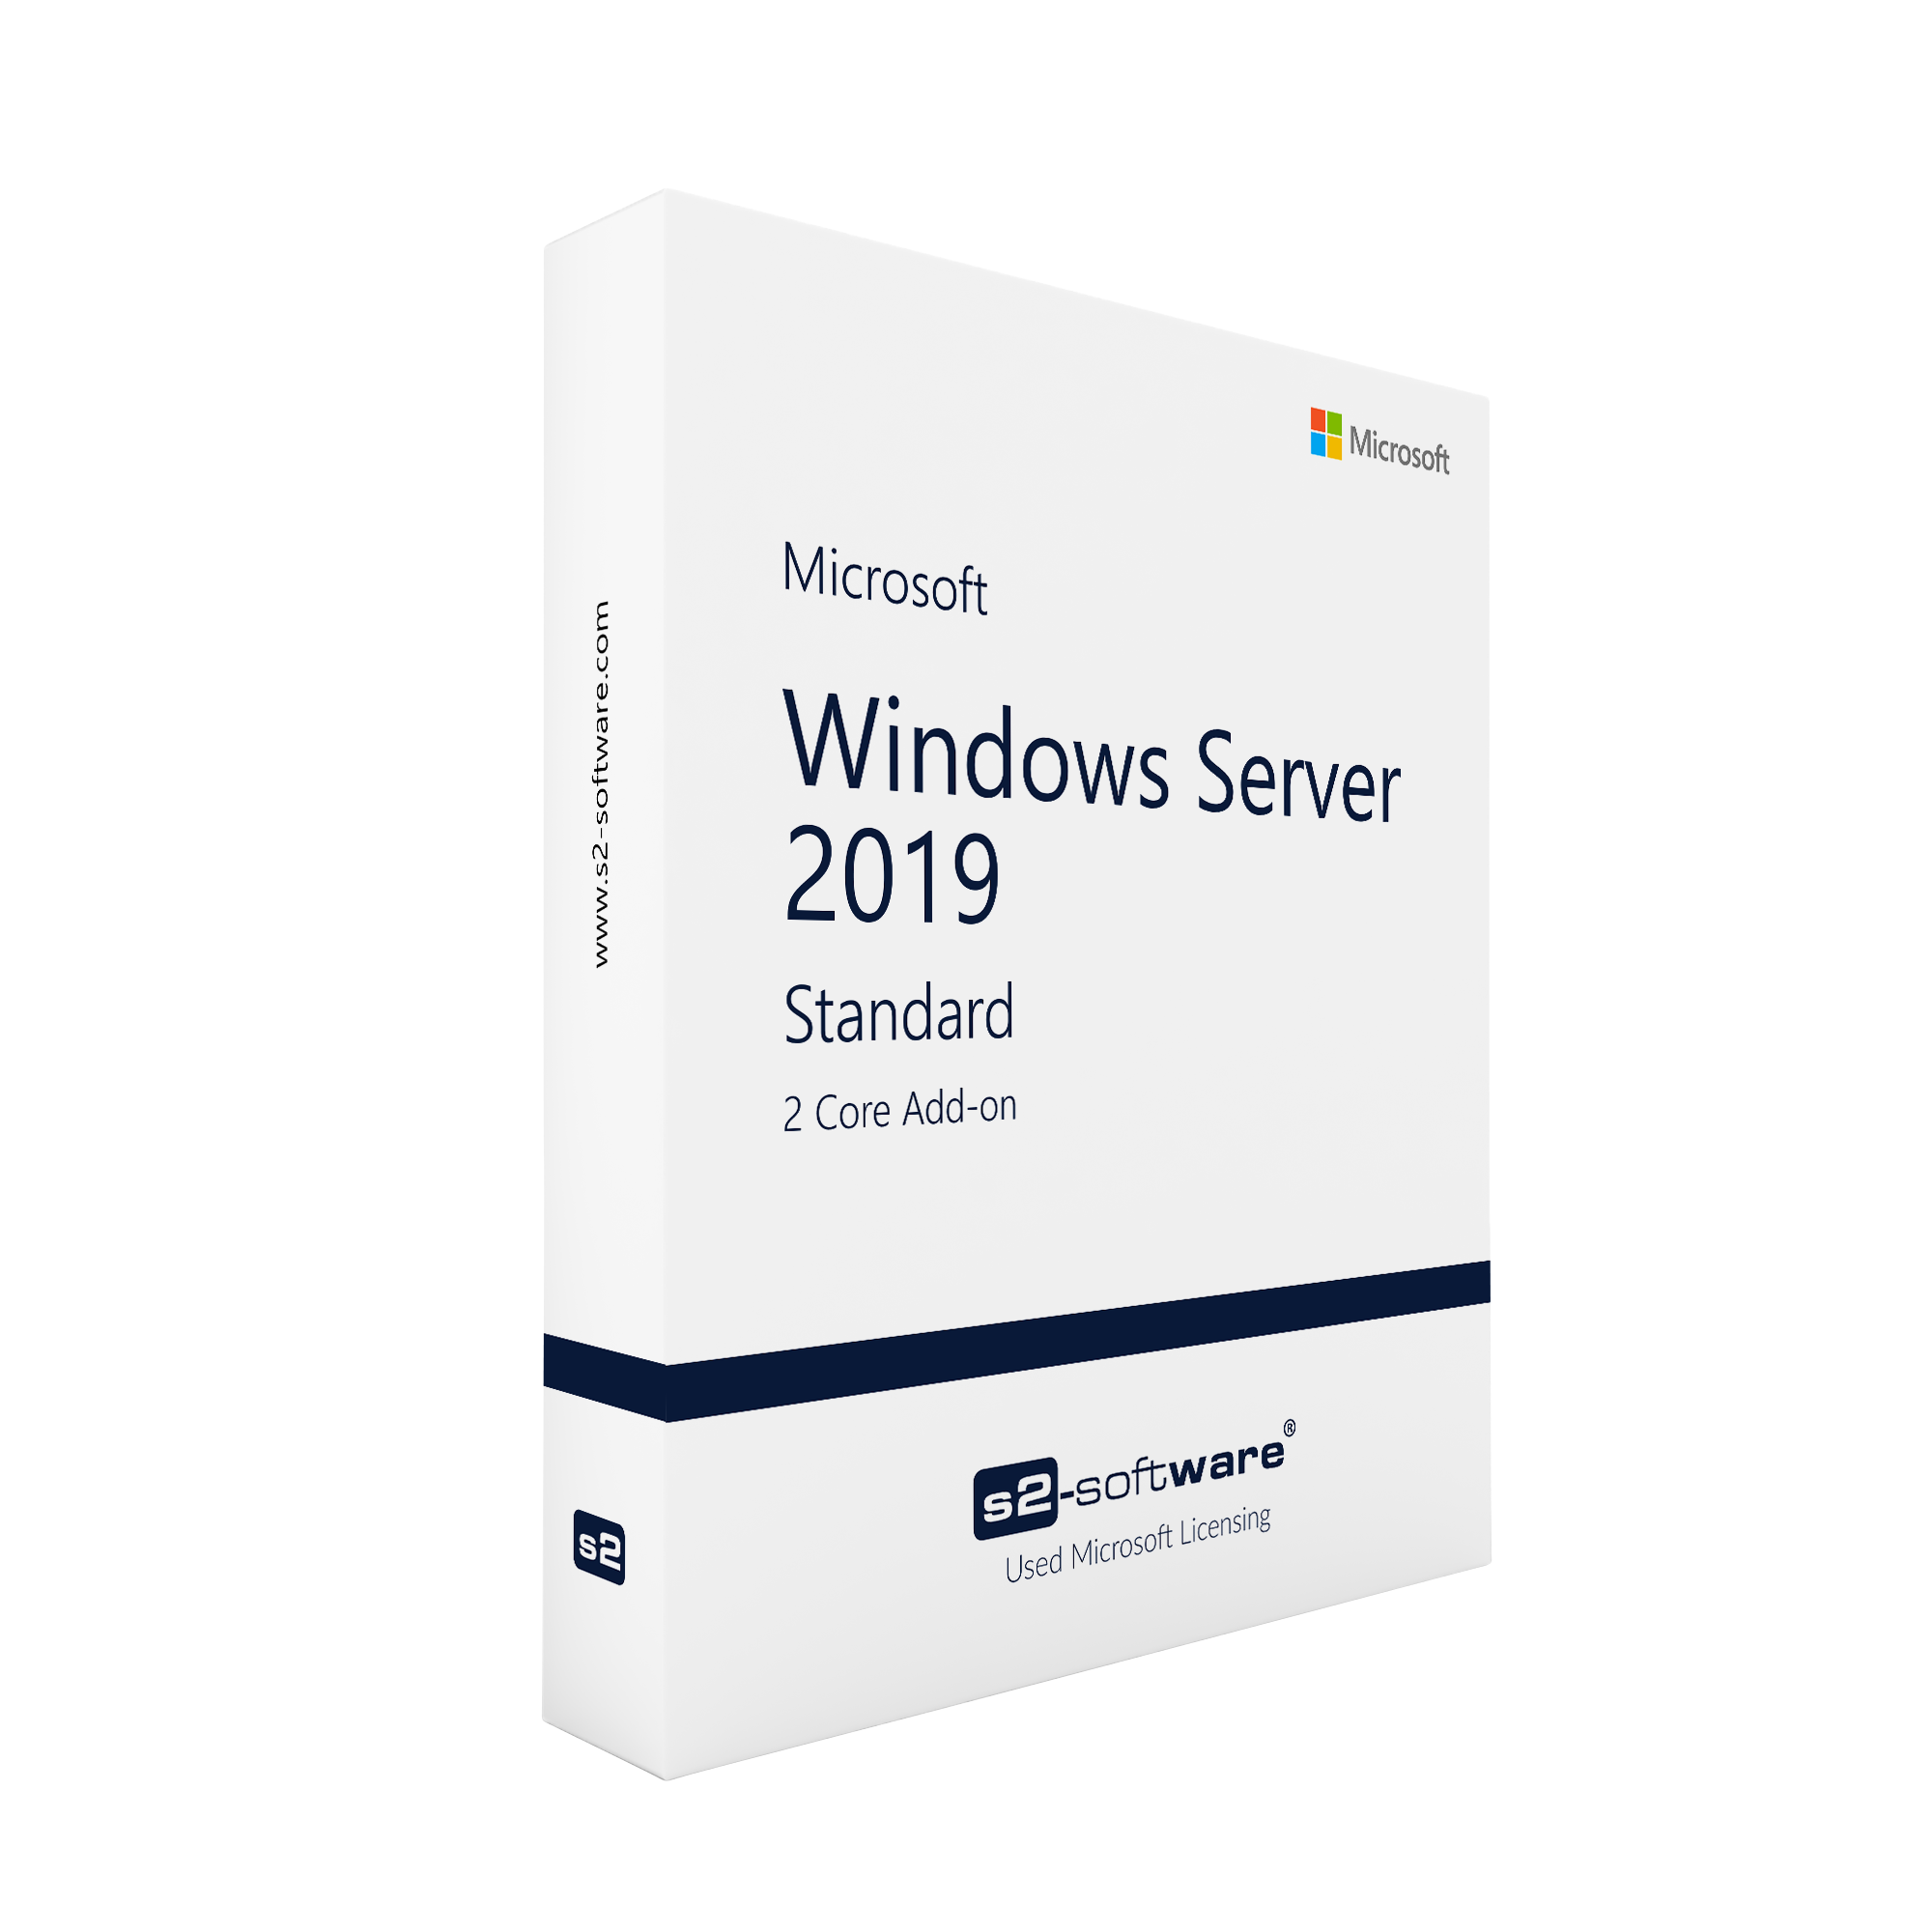 Windows Server 2019 Standard 2 Core Add-on